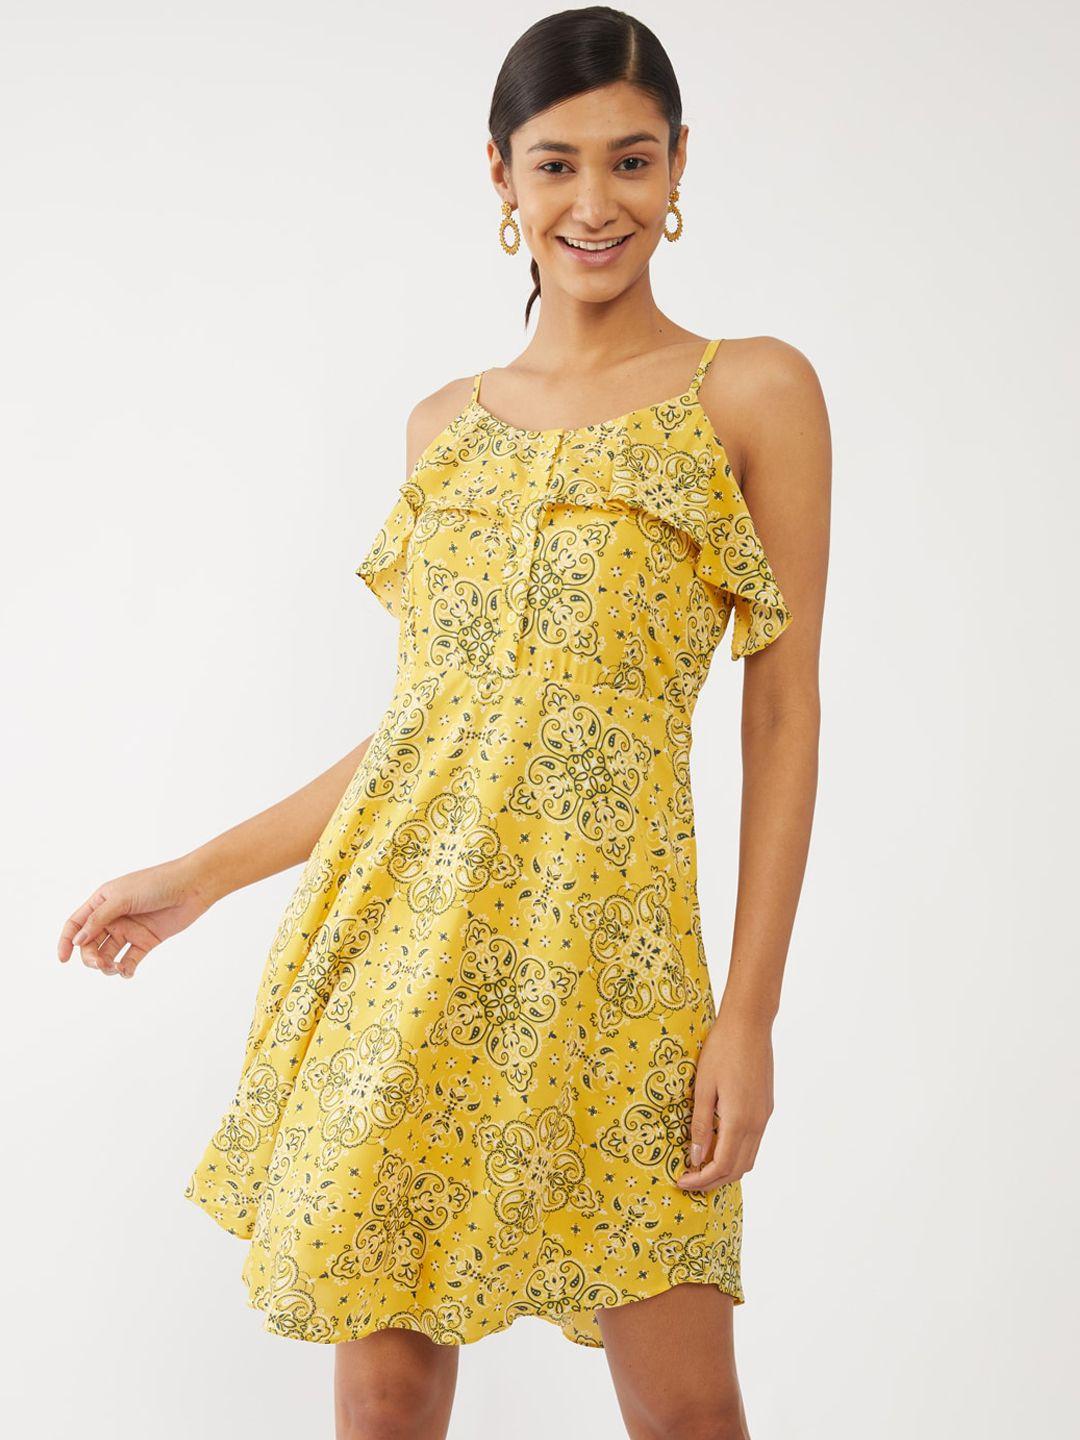 zink london yellow floral dress